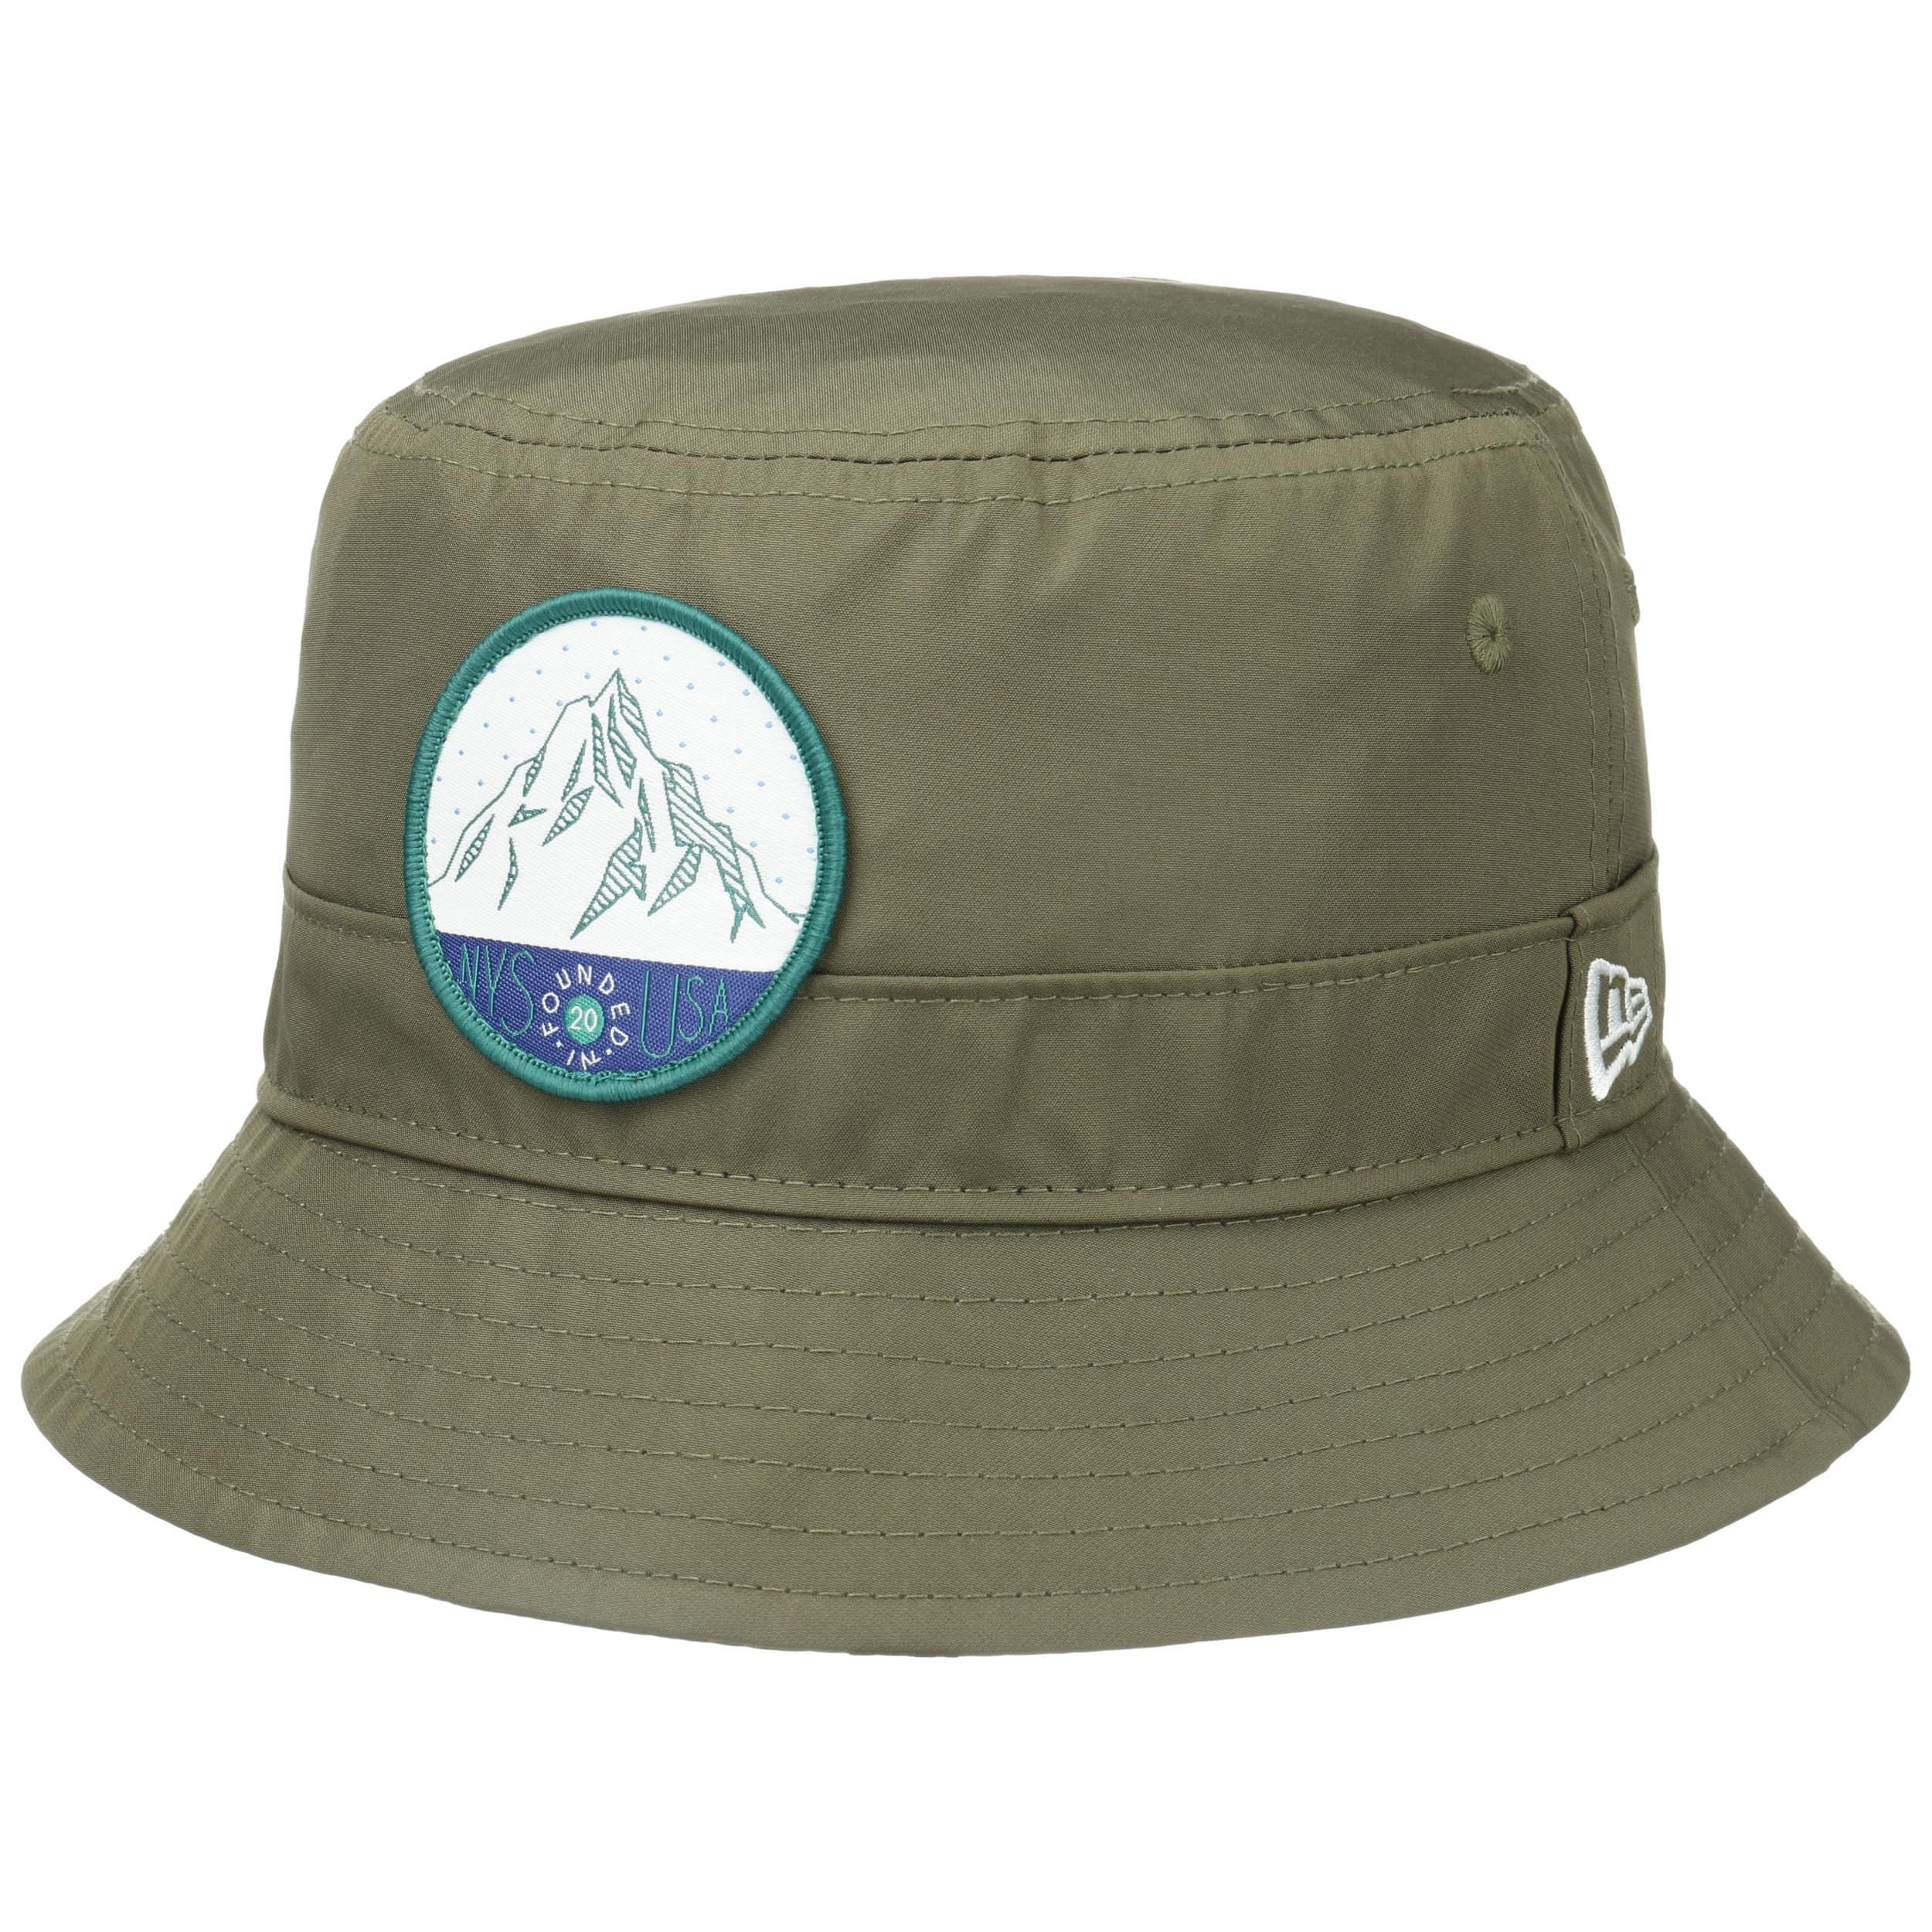 Outdoor Bucket Fishing Hat by New Era